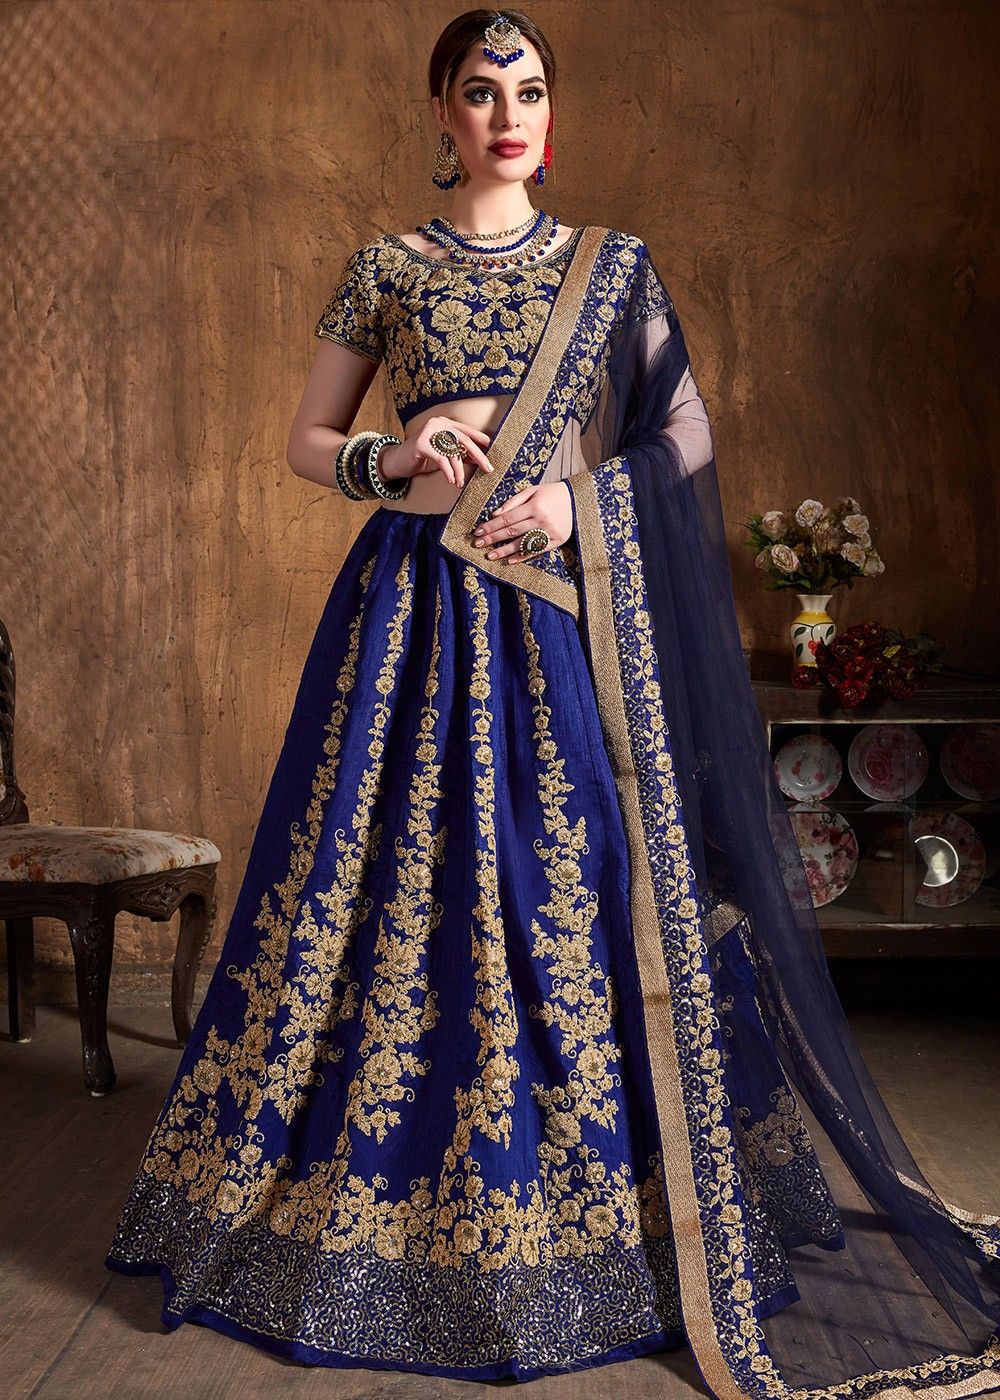 Velvet Pearl Work Wedding Wear Lehenga Choli Indian Ethnic Bridal Blue  Lengha | eBay